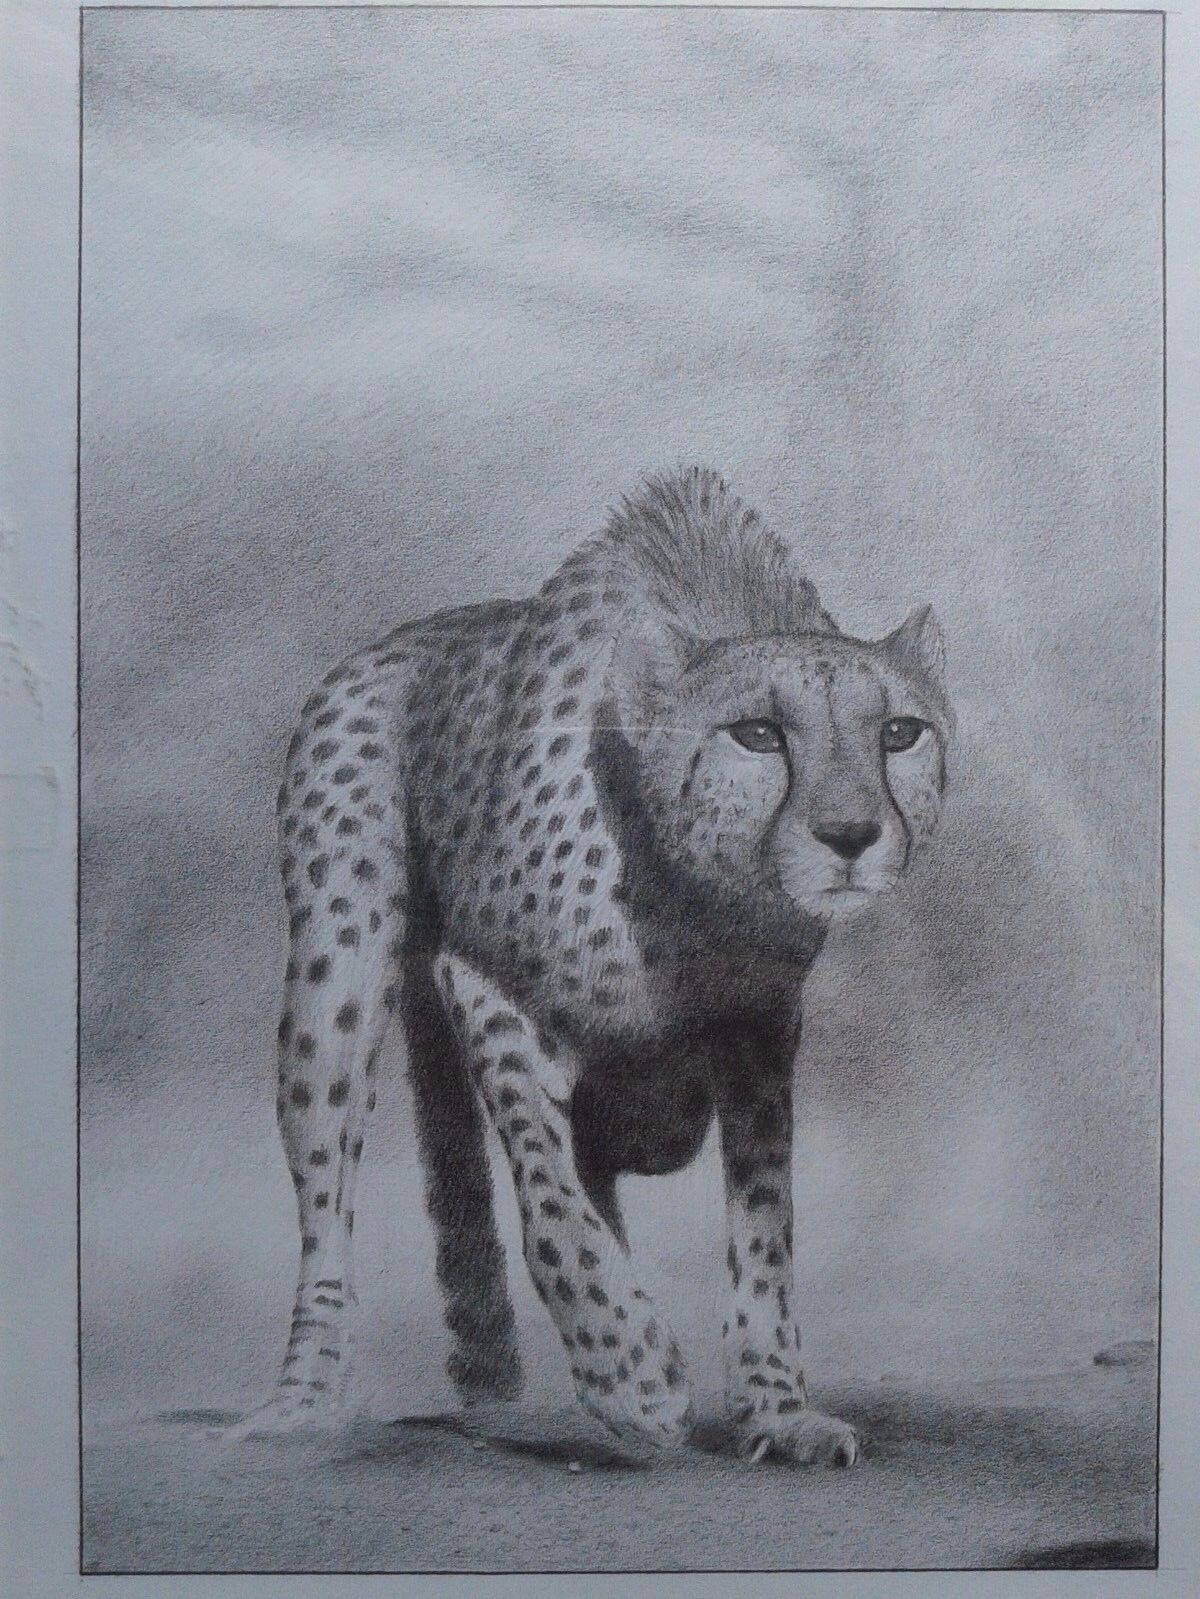 Amazon.com: Imagekind Focused, African Cheetah Pencil Drawing Realistic  Wildlife Illustration by Peter Williams, Poster Art Print, Wall Decor |  48x27